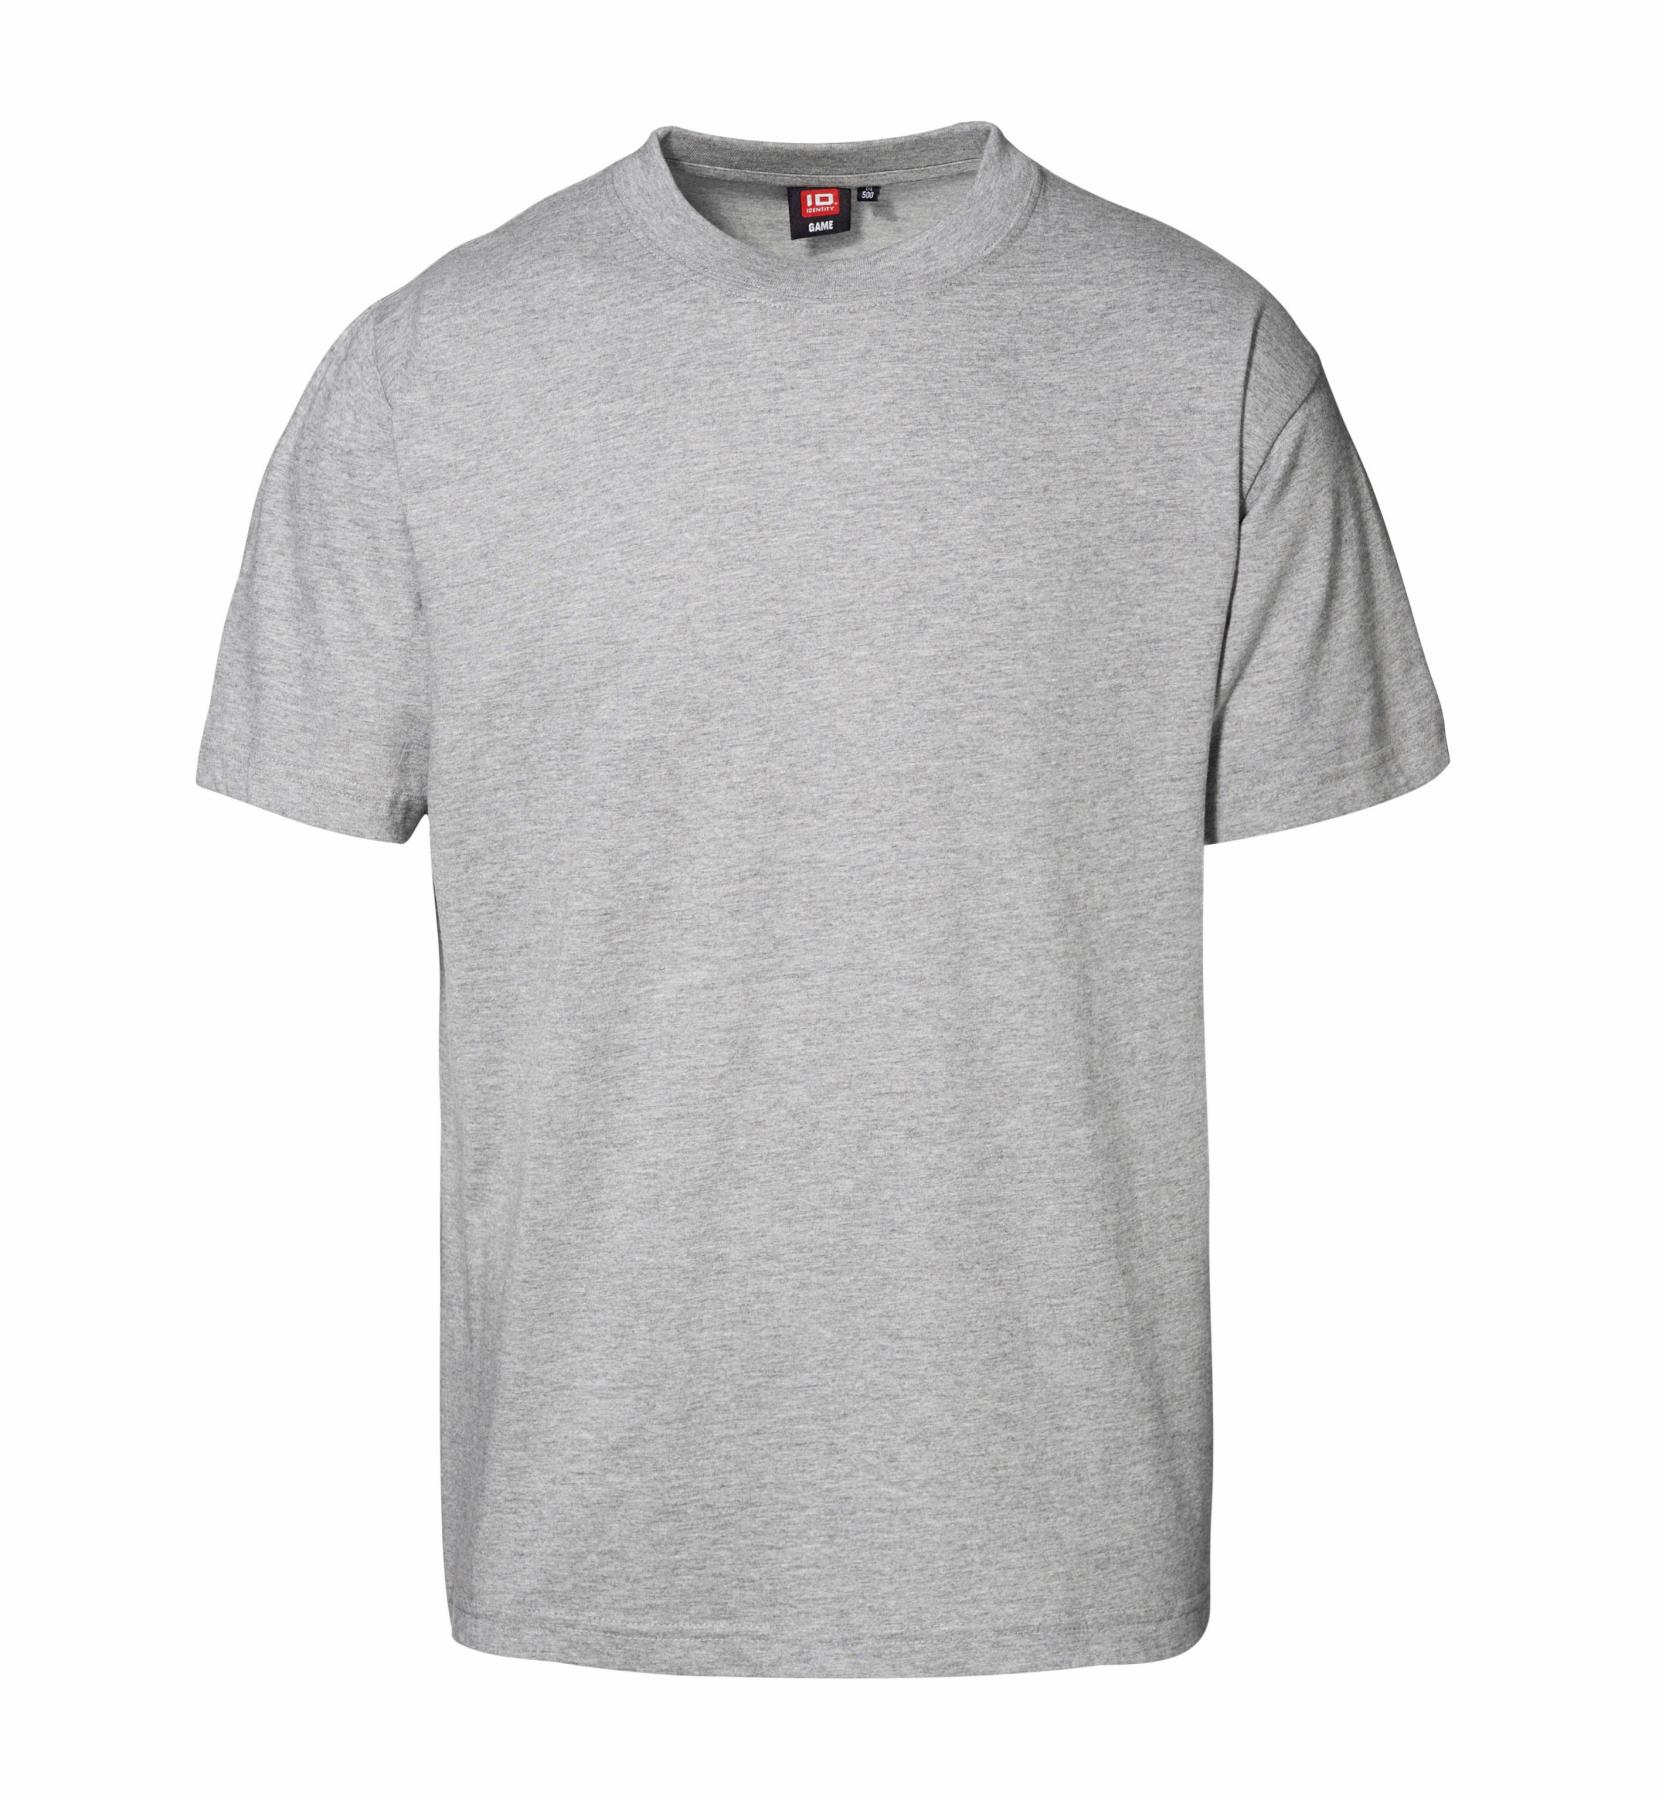 Men's T-shirt GAME 100% cotton 160 g/m² ID Identity® Grey mottled M